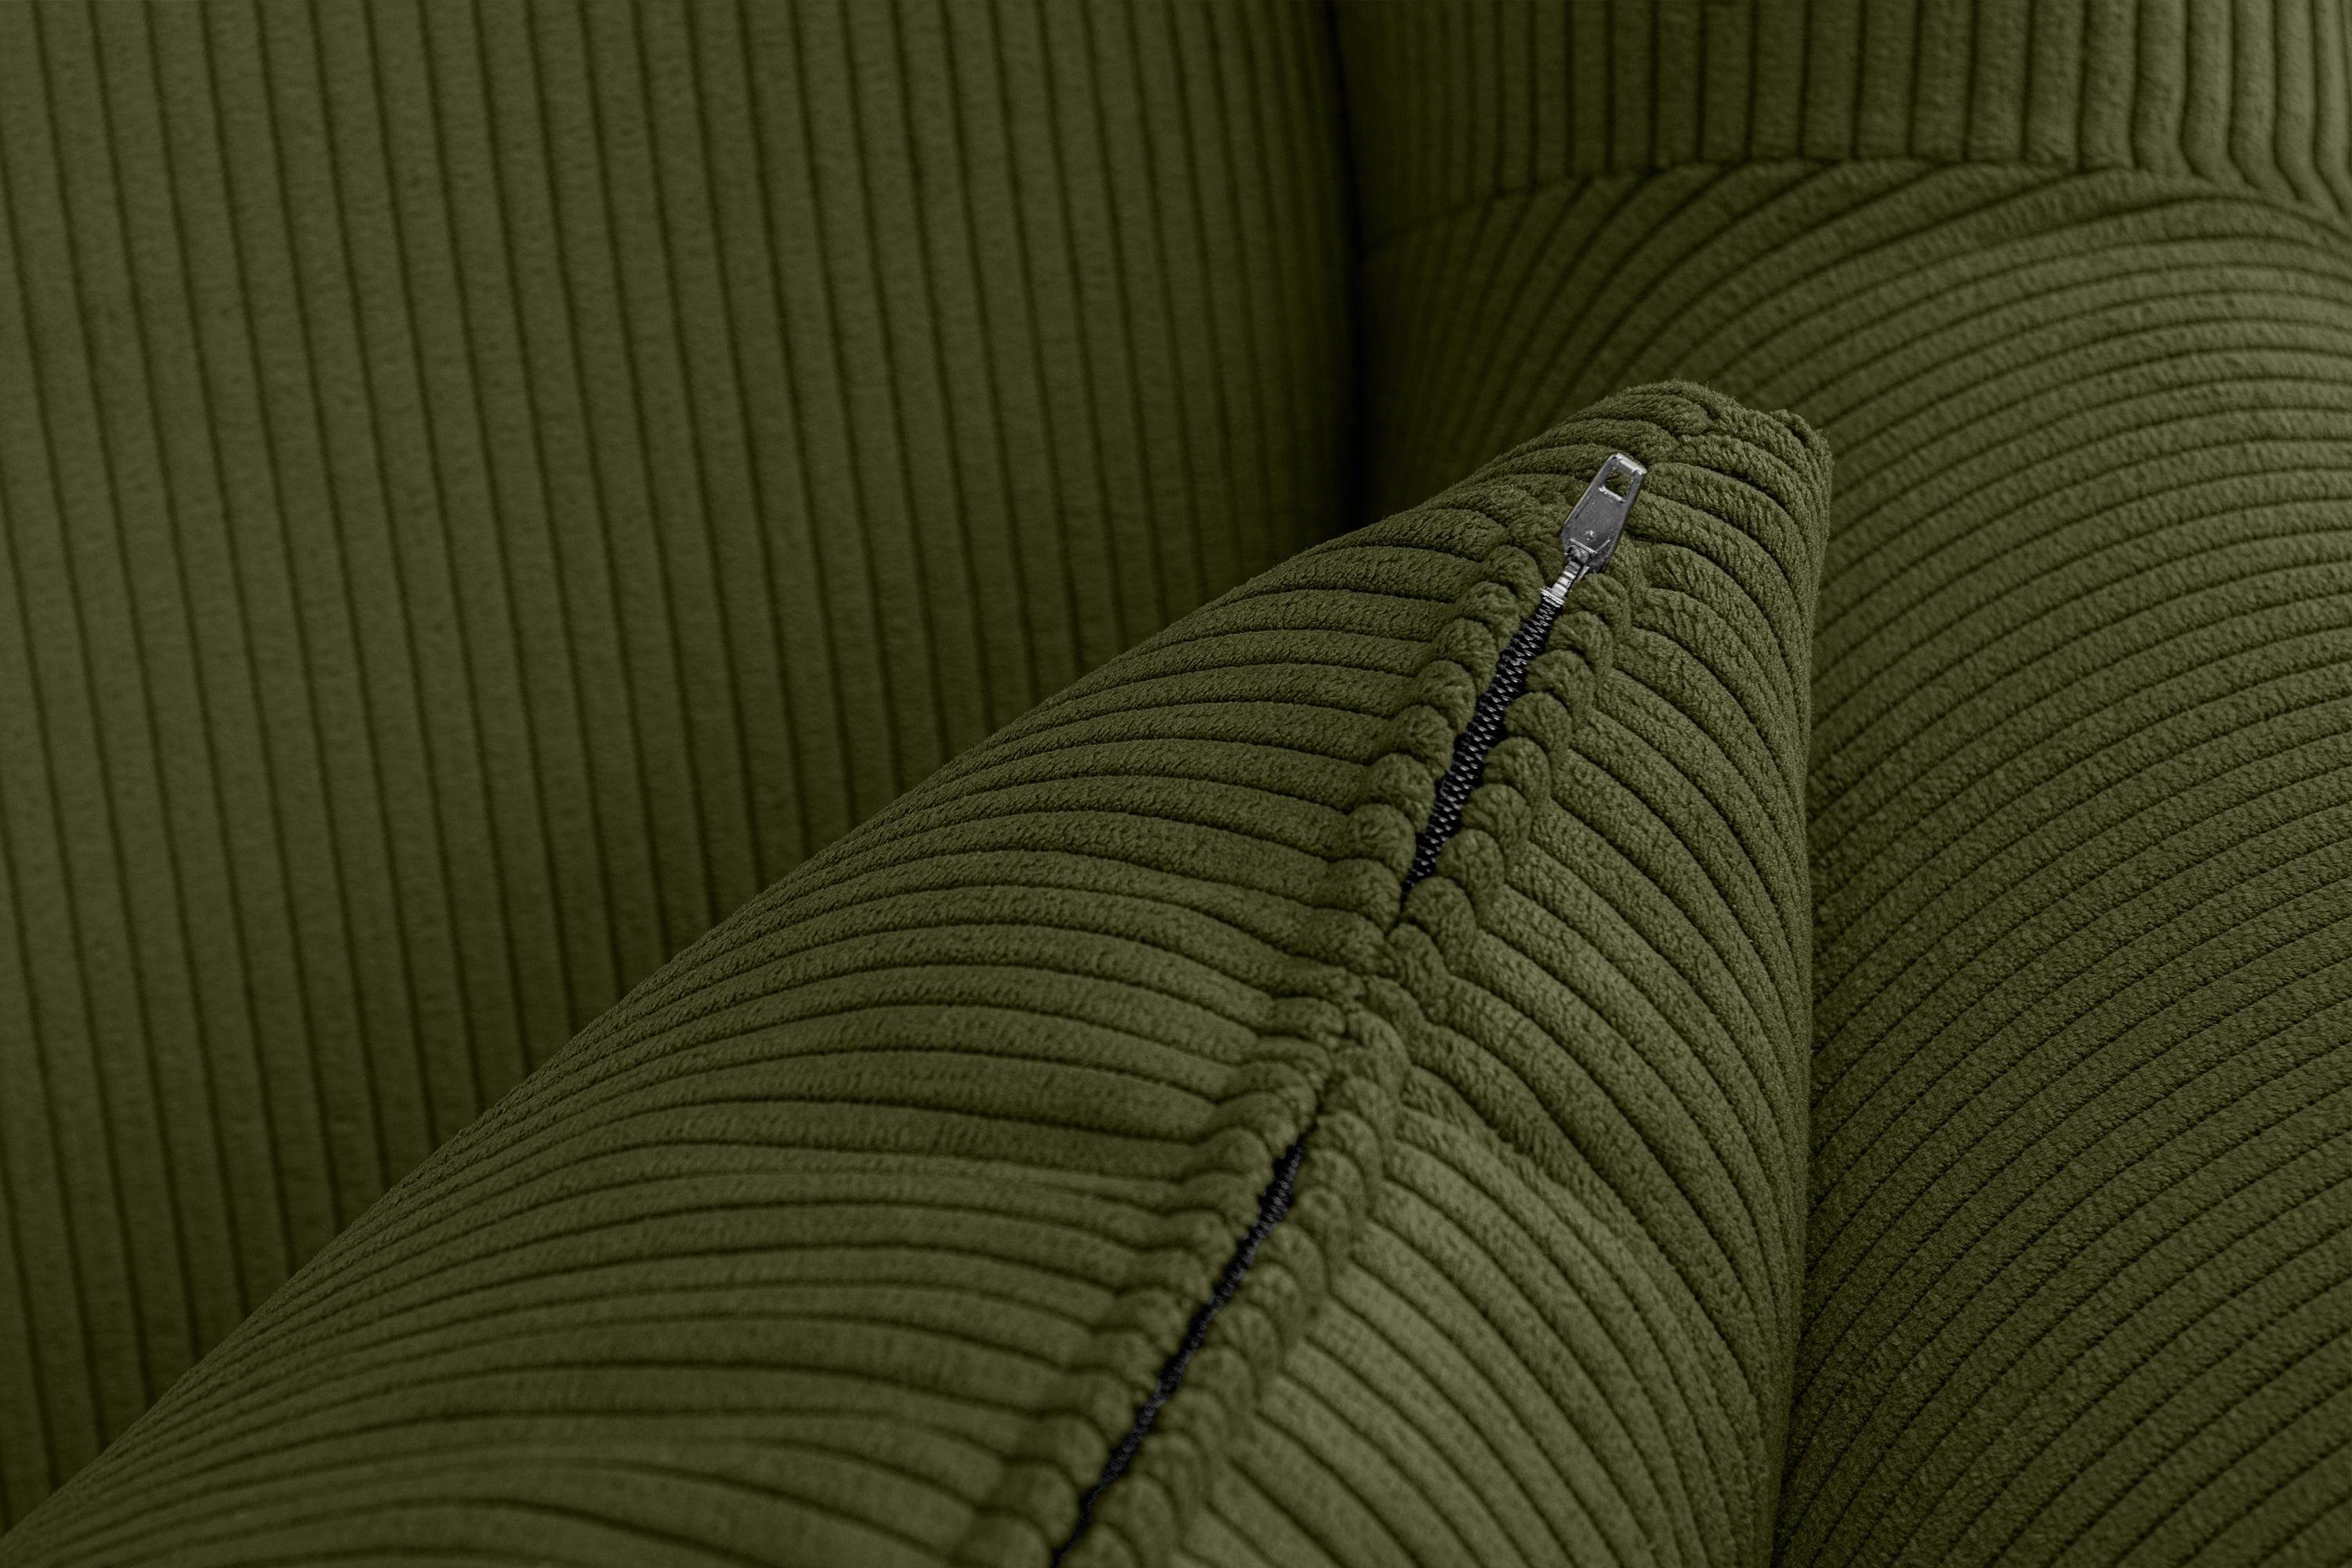 Konsimo Ohrensessel STRALIS Sessel, zeitloses Design, Kissen inklusive hohe dekorativem Füße